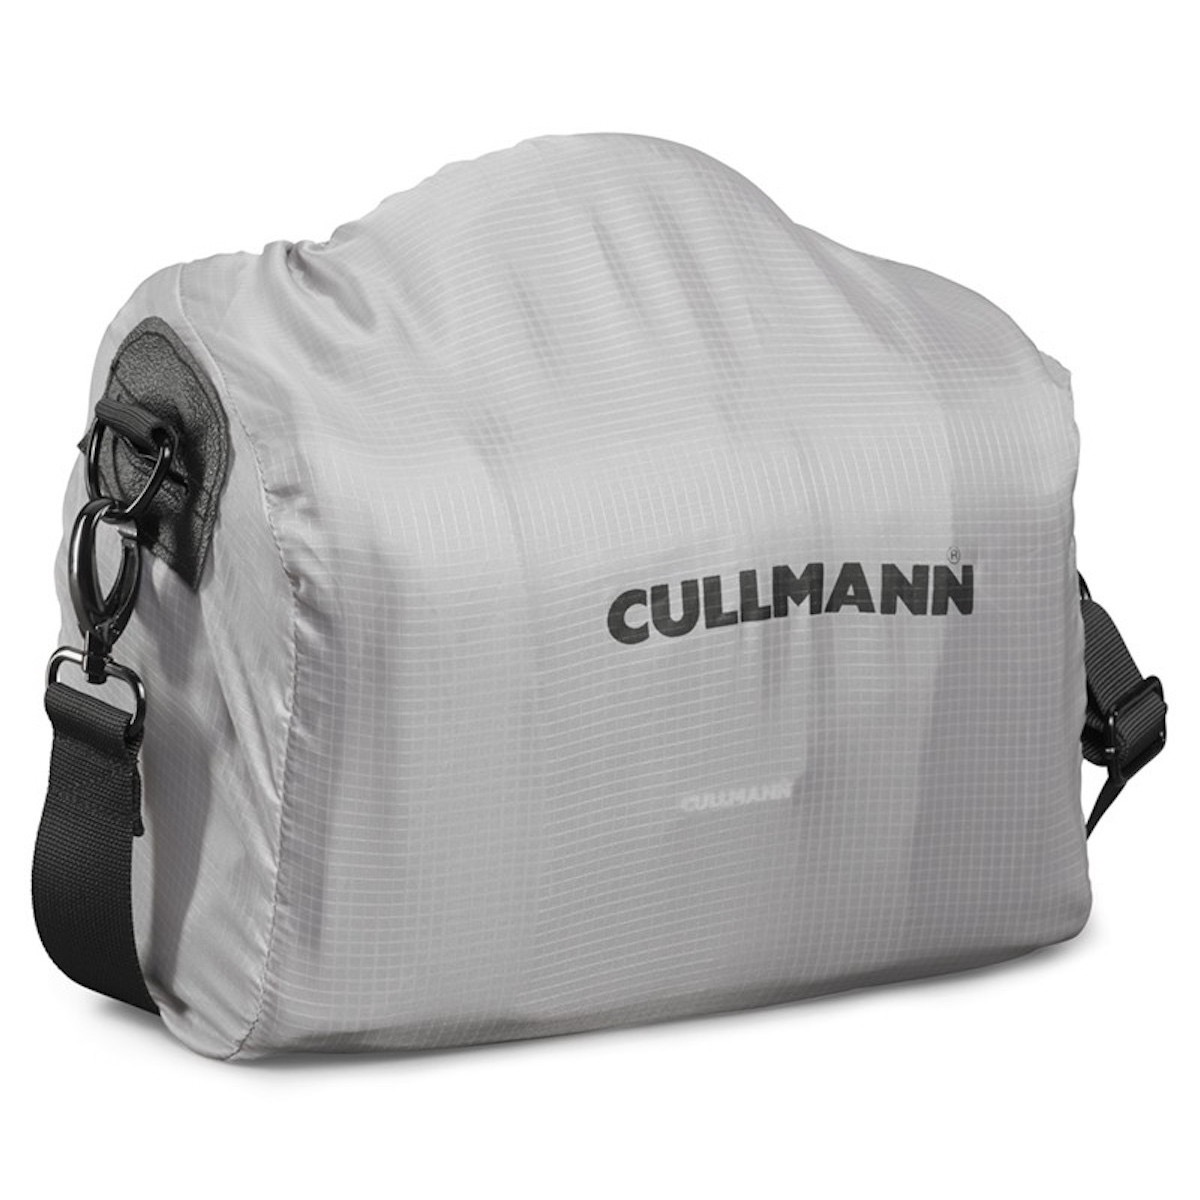 Cullmann Sydney pro Maxima 200